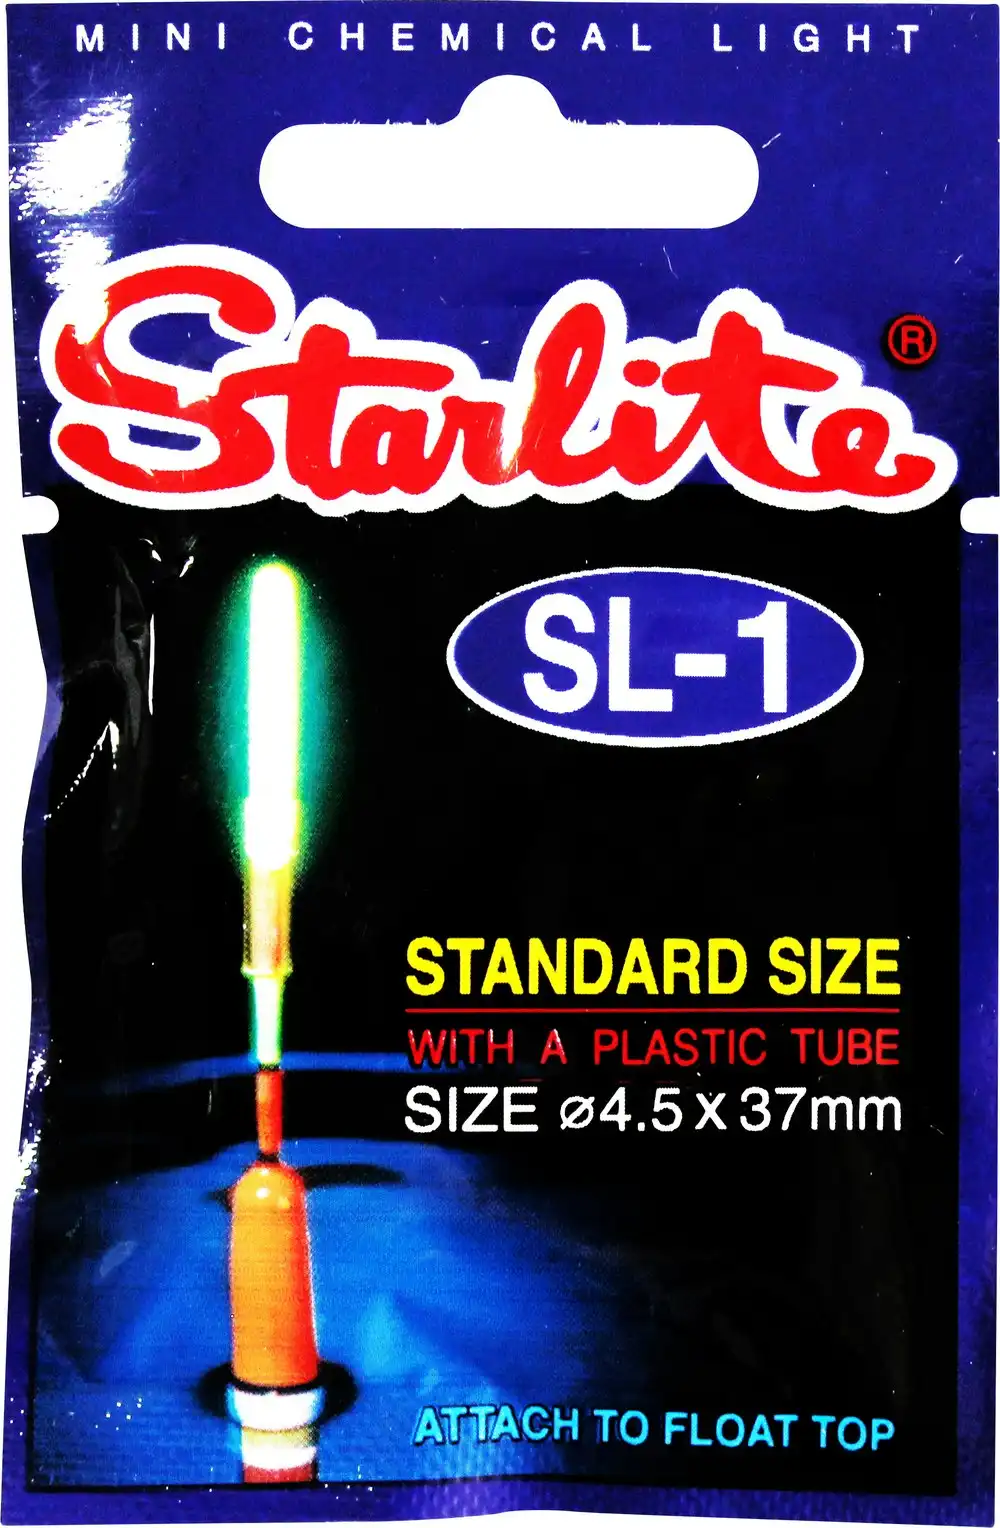 37mm Starlite Chemical Fishing Light with Tube - SL-1 Fluoro Glow Stick Light